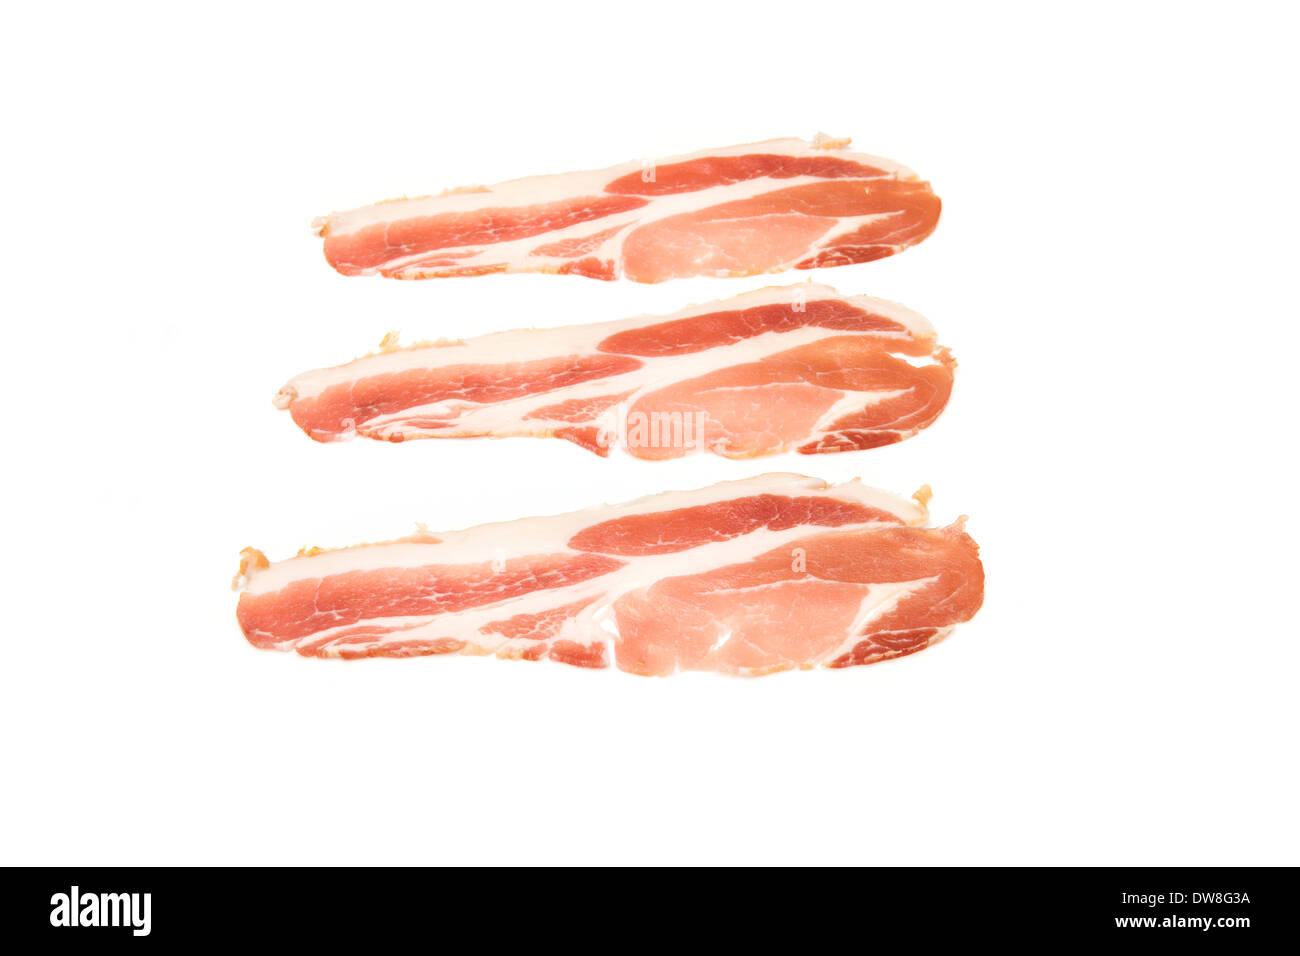 Applewood smoked bacon rashers isolated on a white studio background. Stock Photo